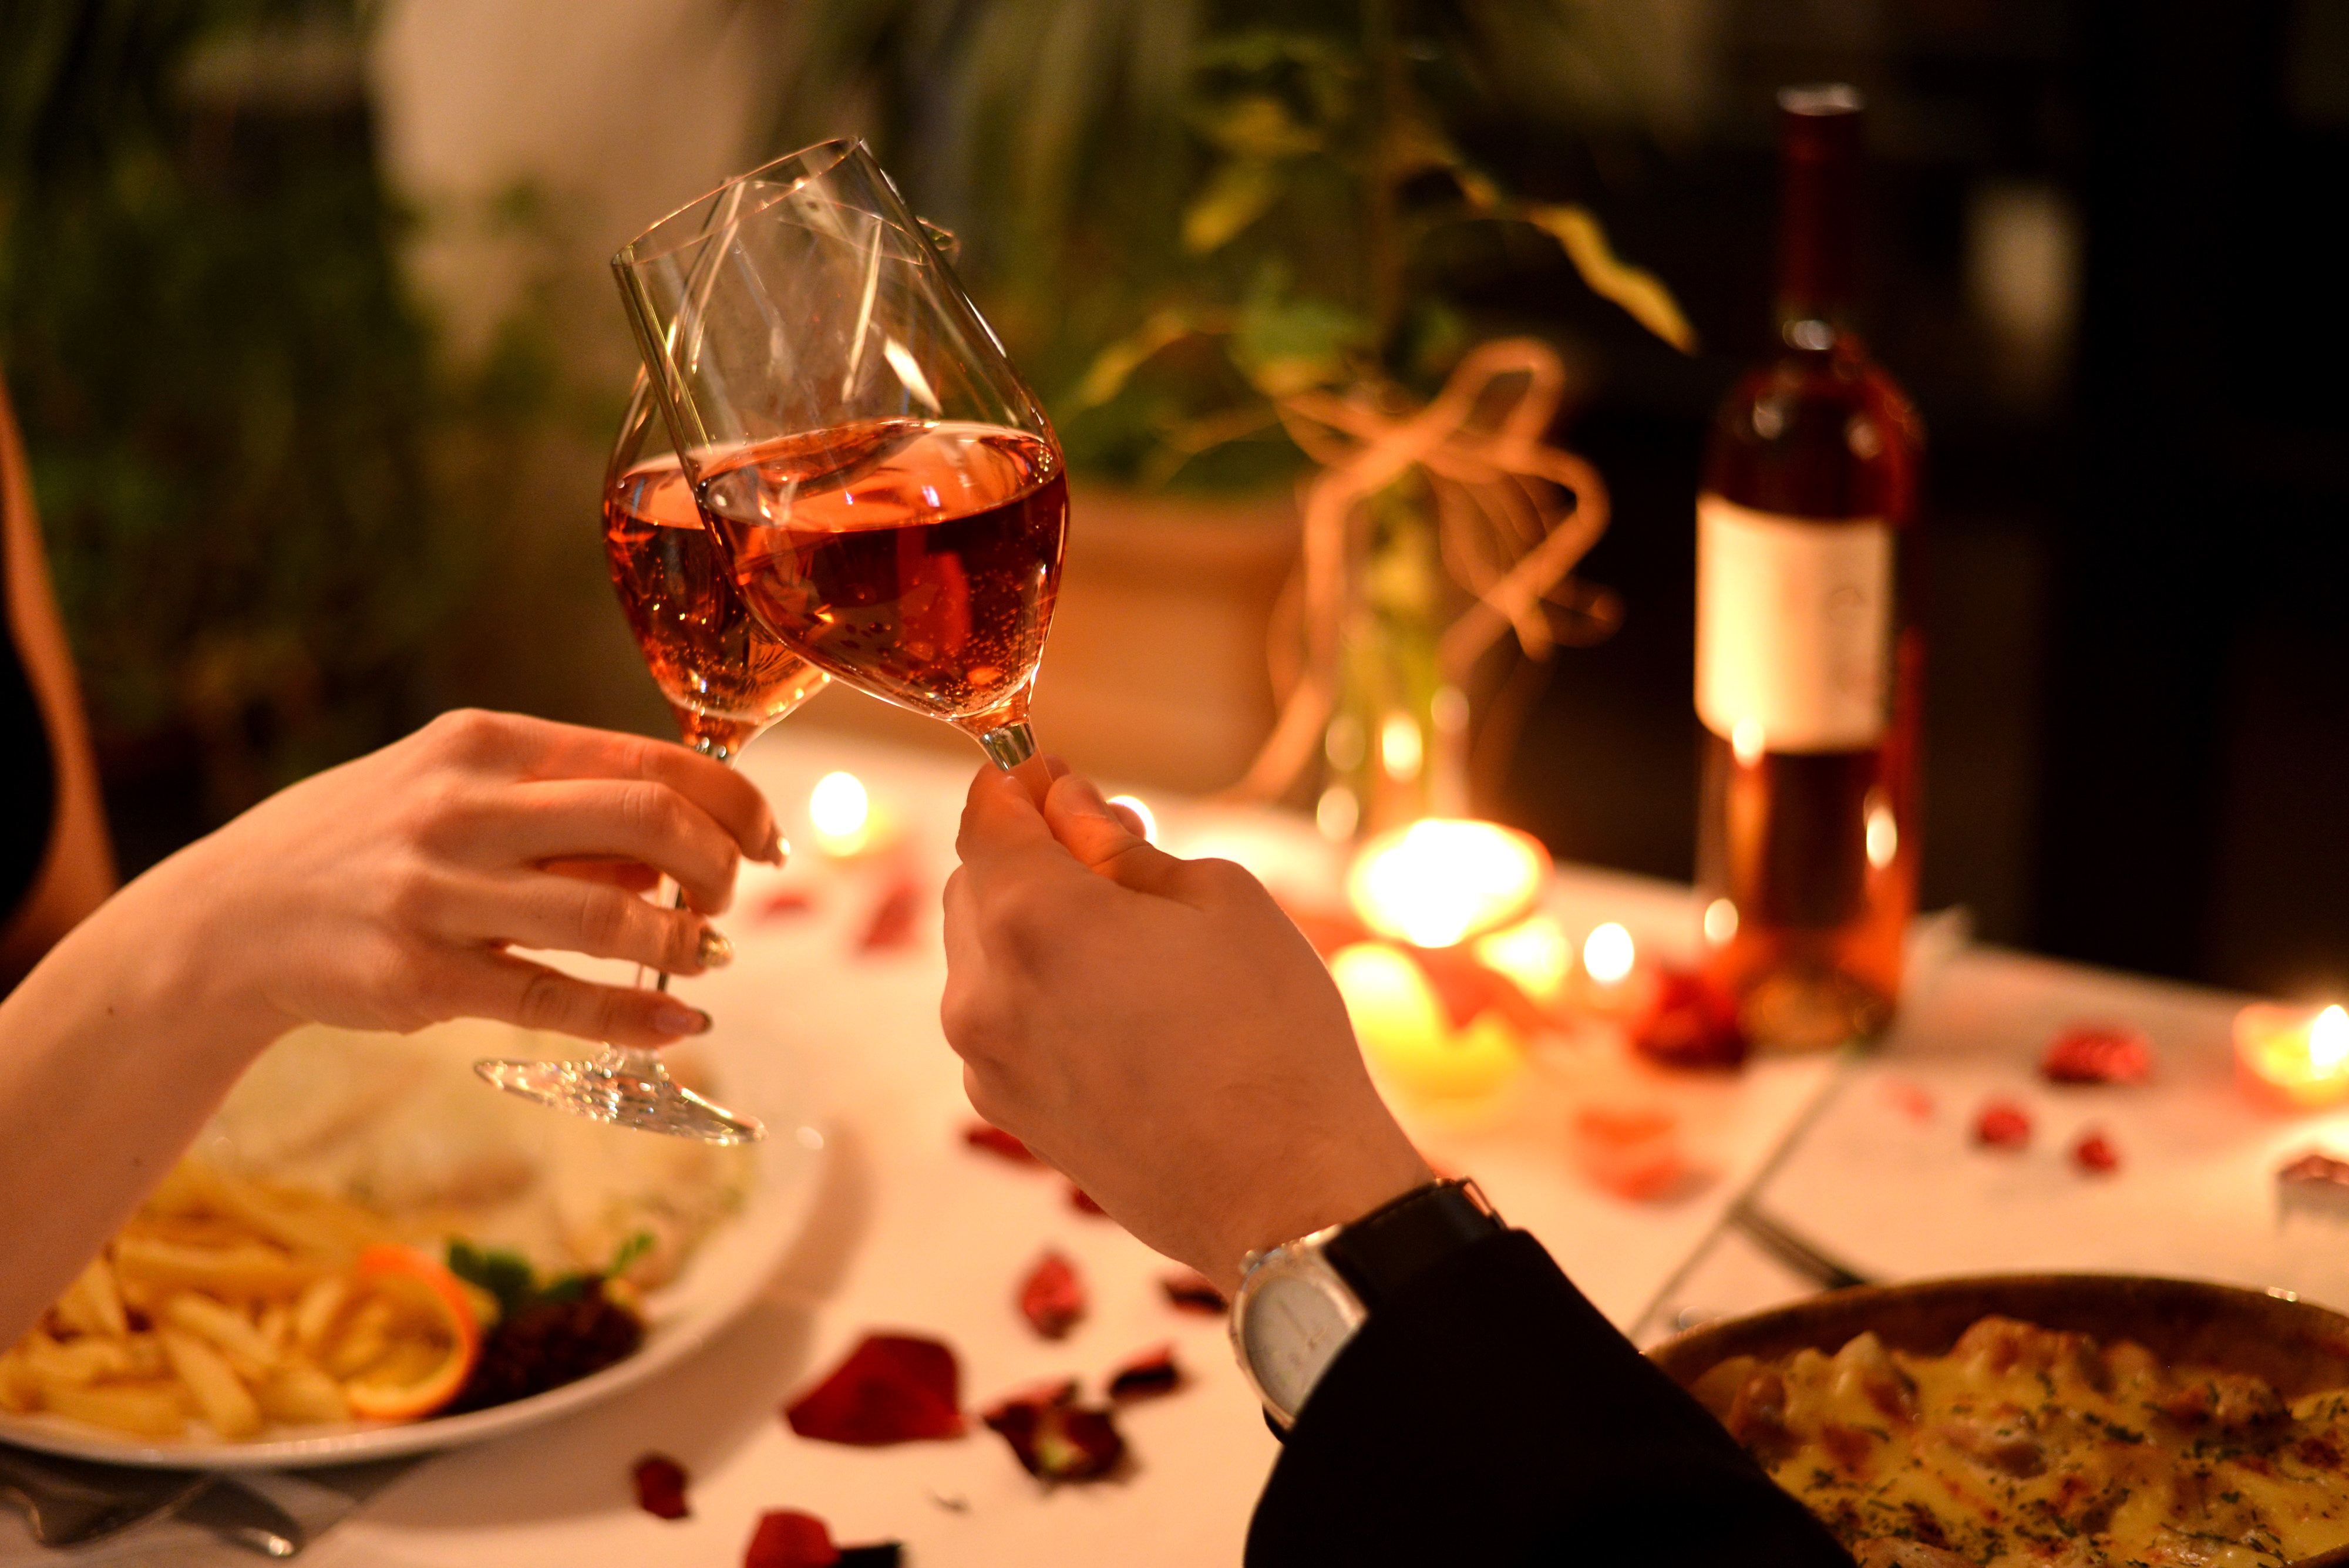 Romantic dinner | Source: Shutterstock